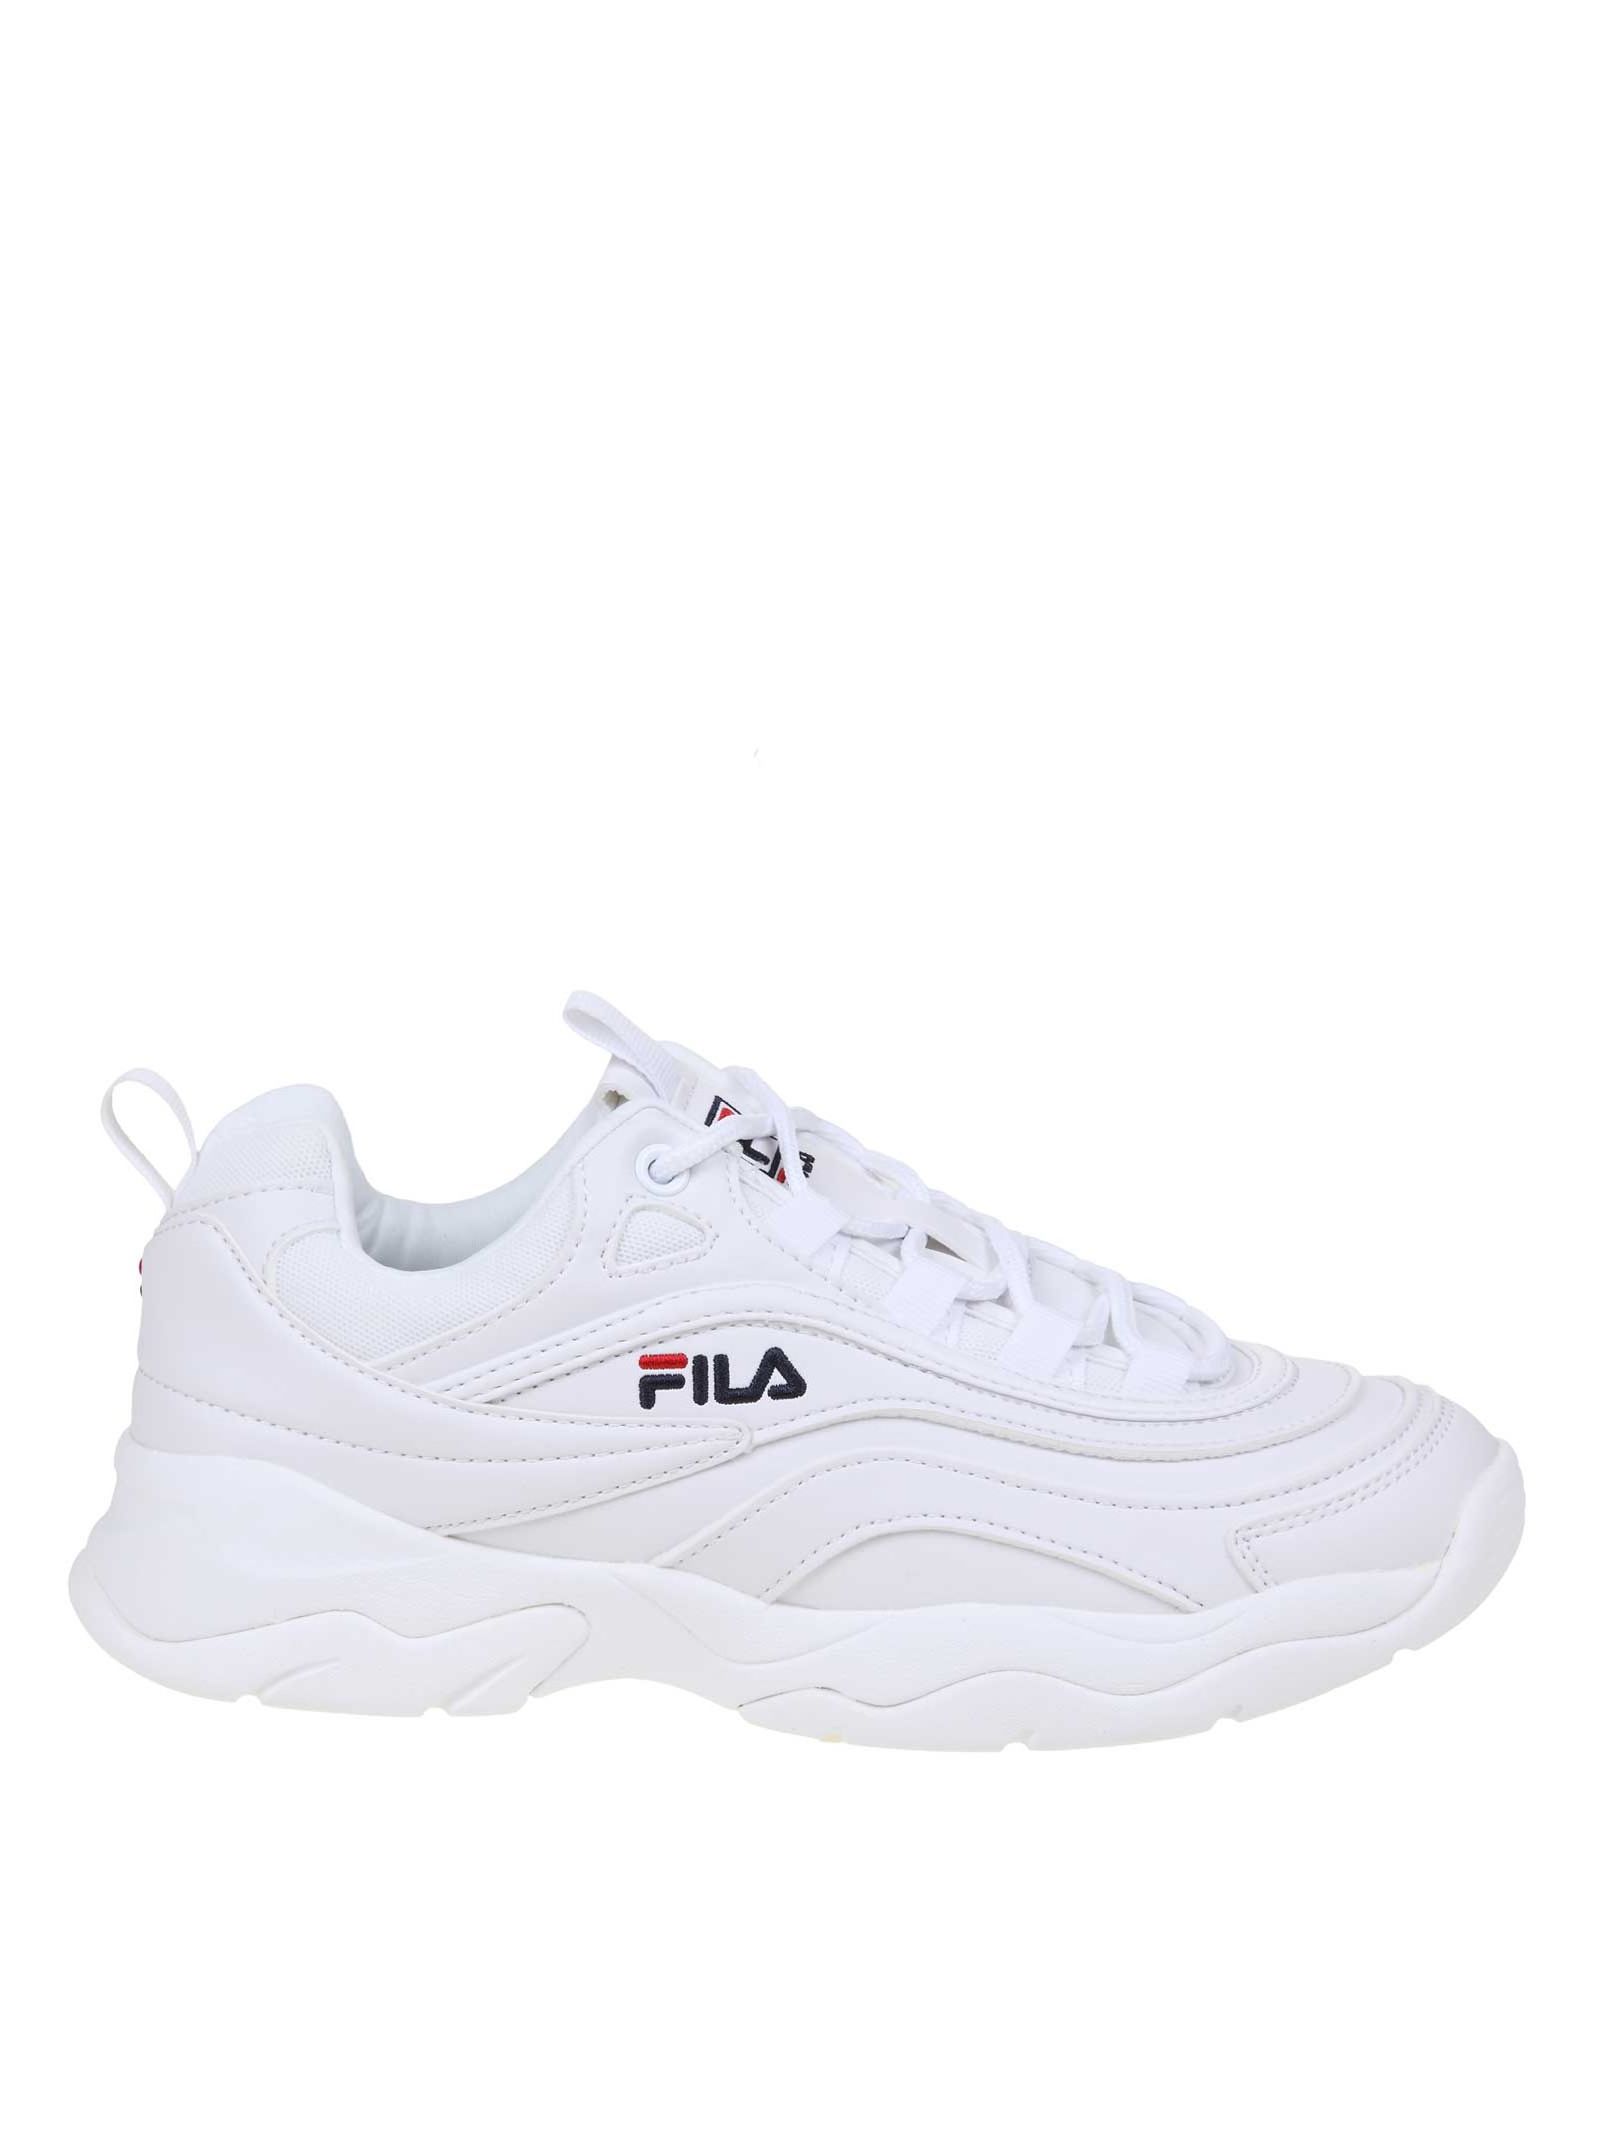 fila rubber shoes price